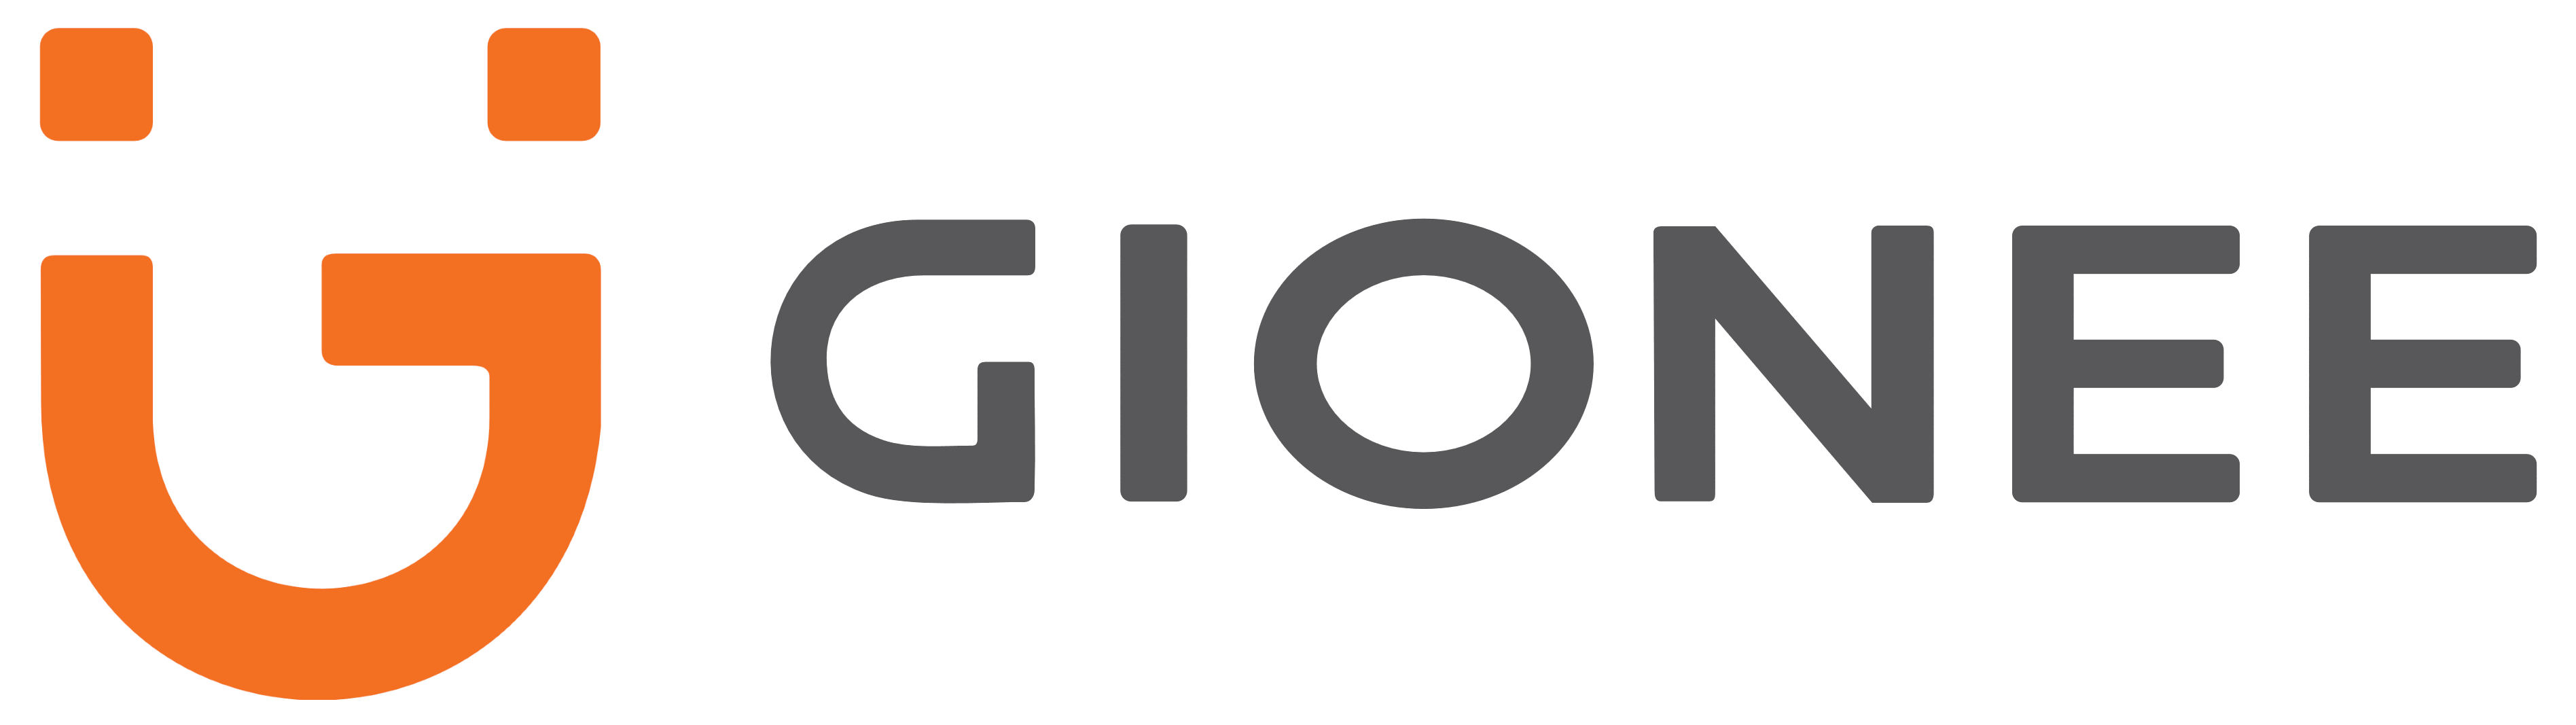 Gionee Logo - Gionee – Logos Download